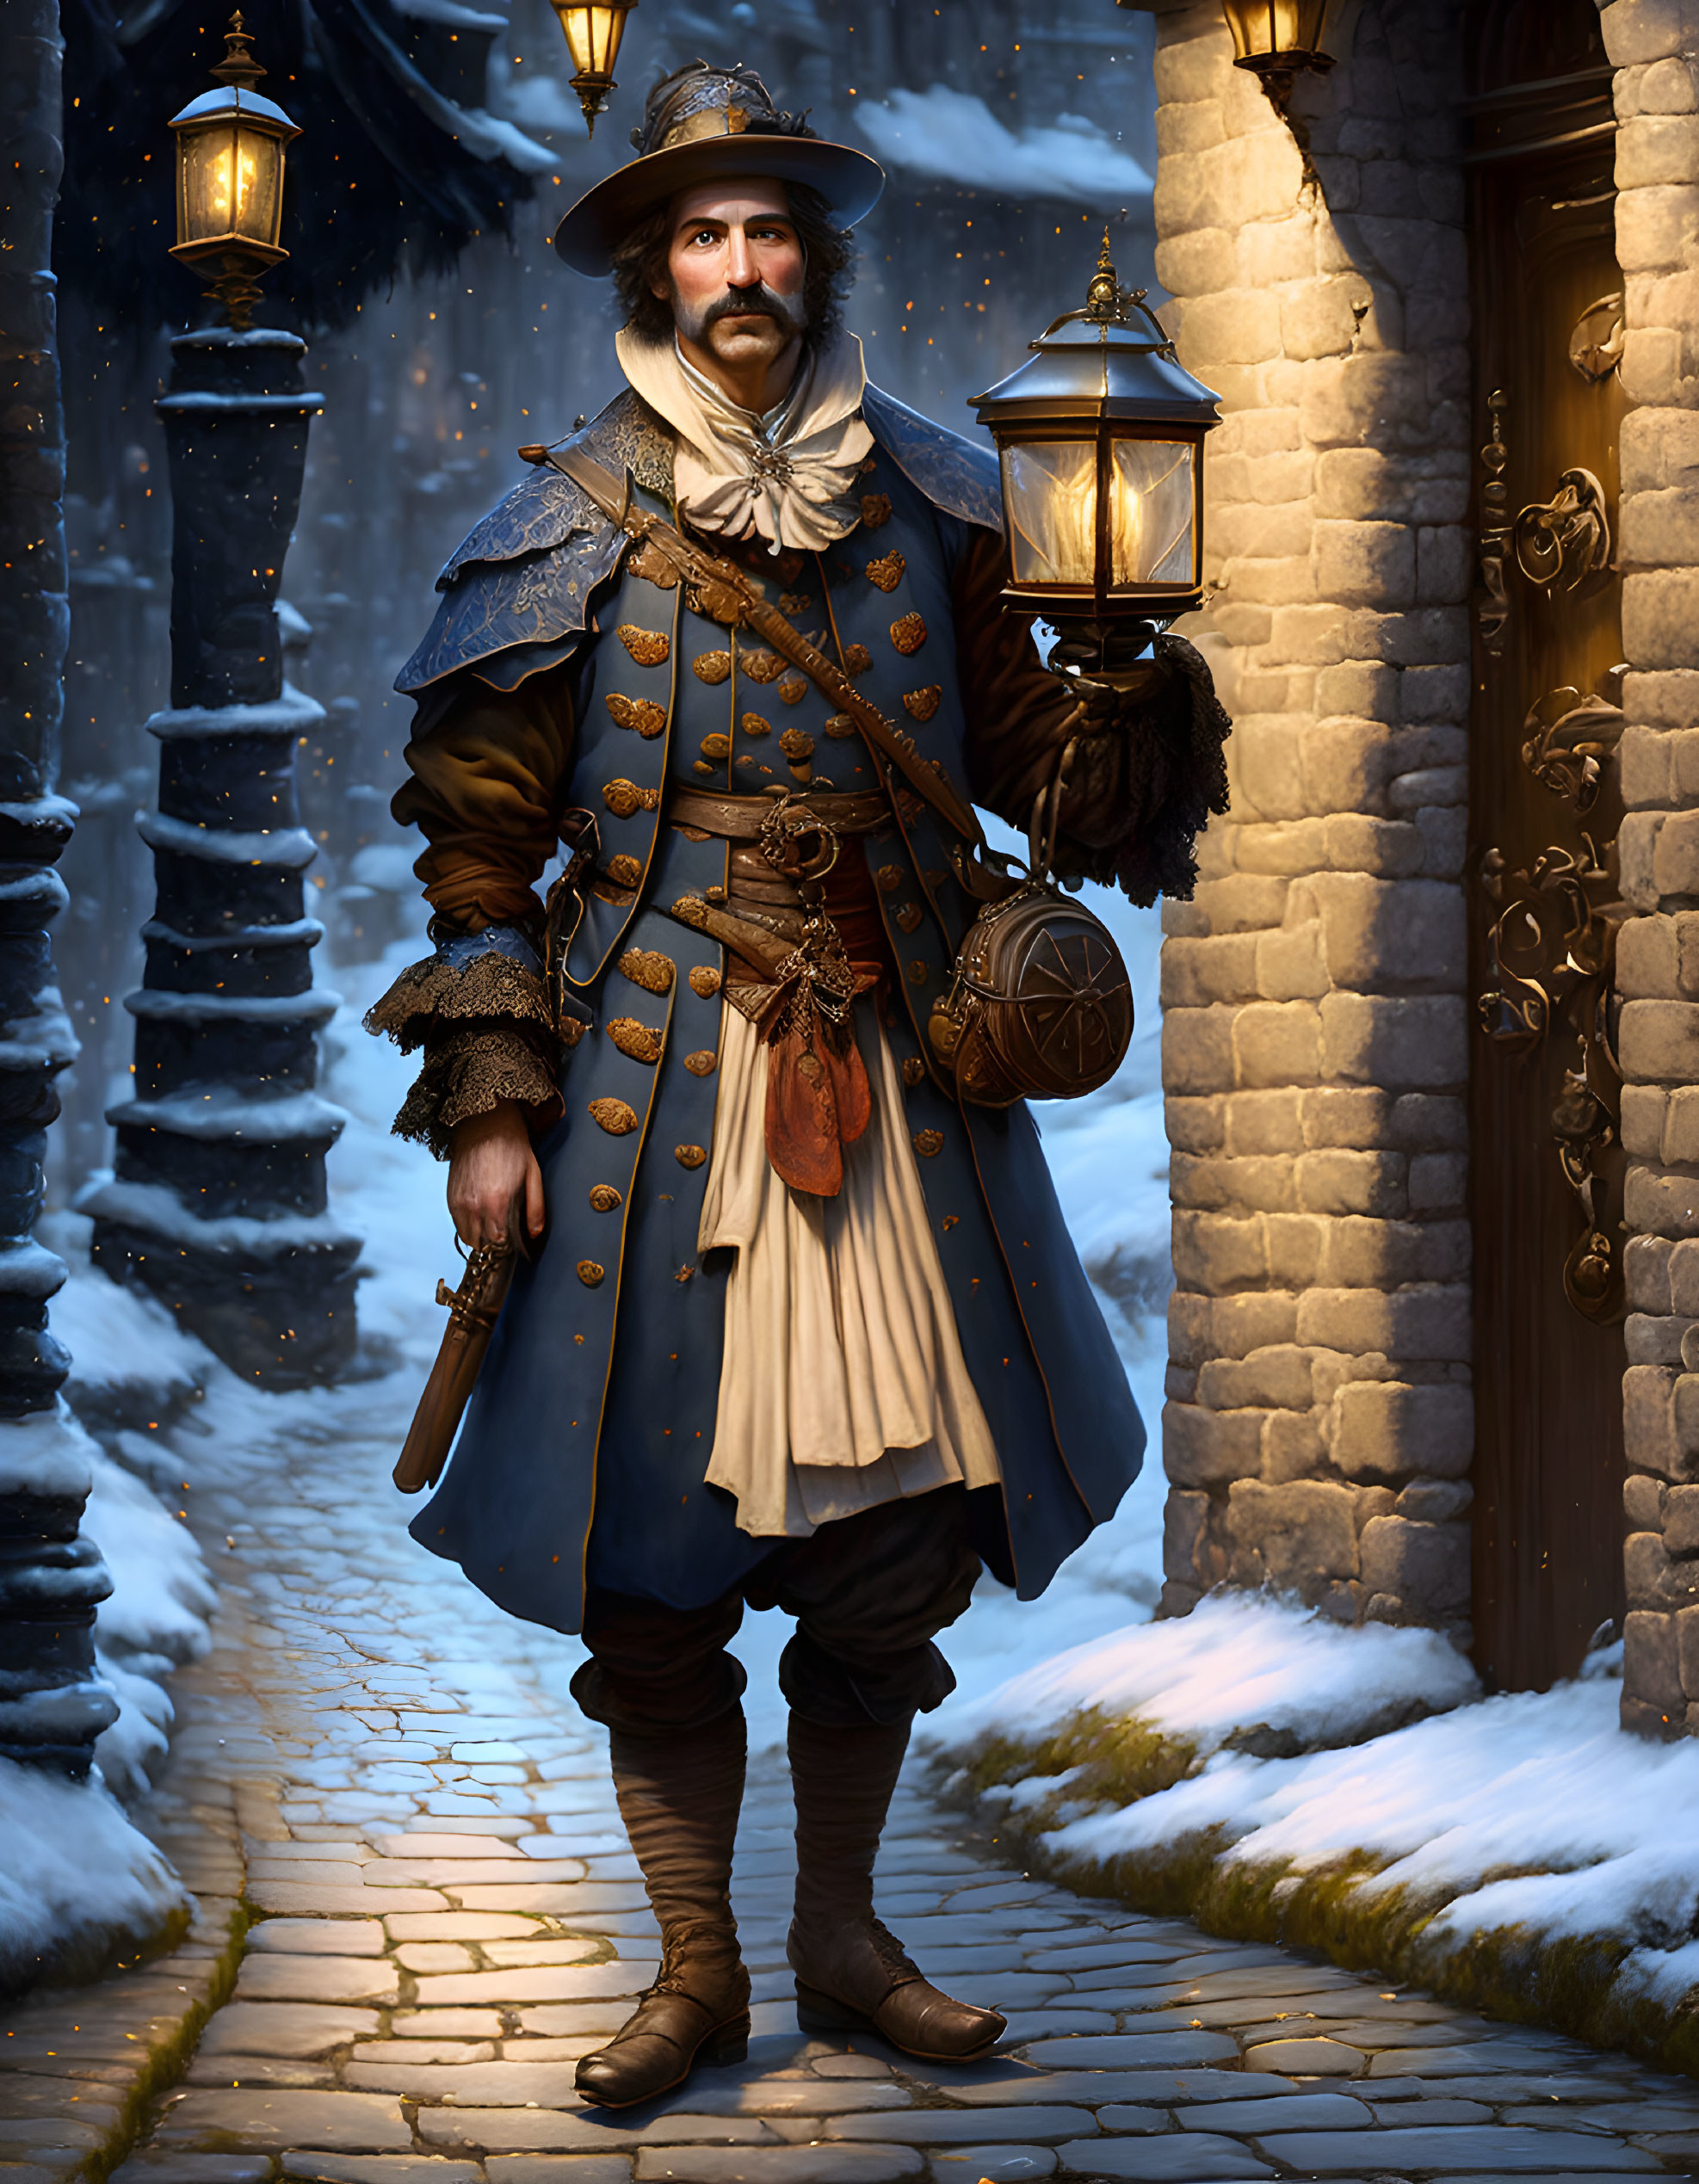  A 17th century night watchman